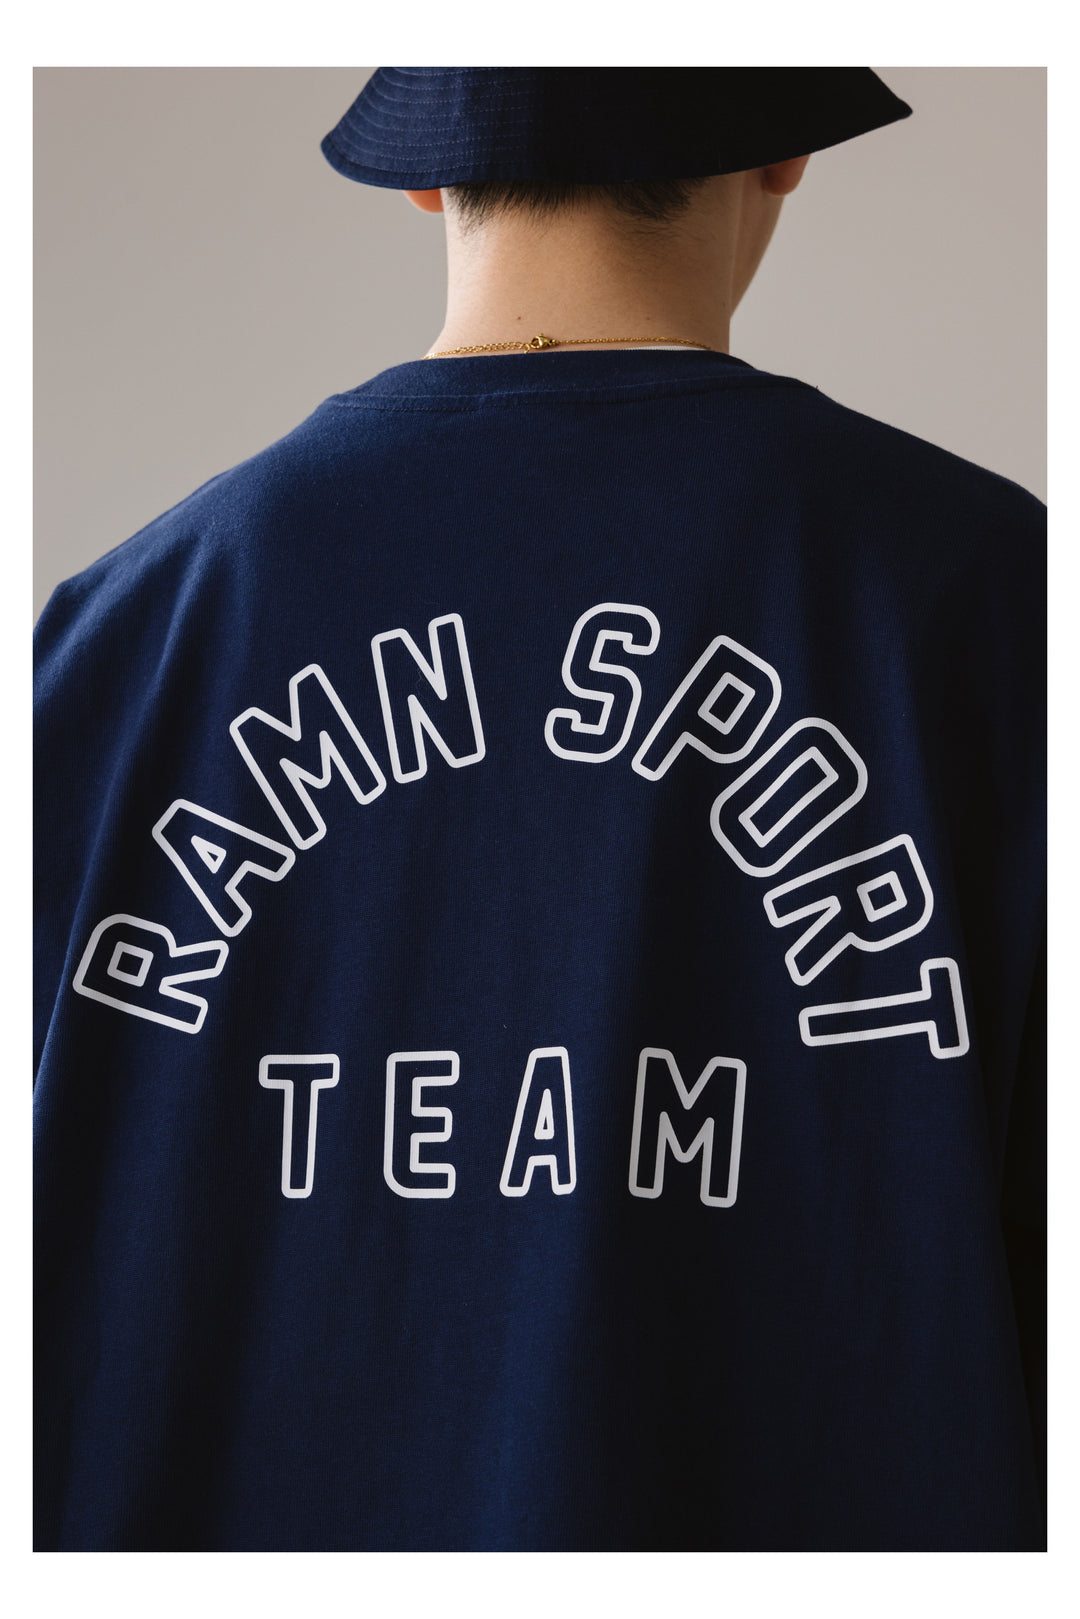 RAMN Sports Team Tee